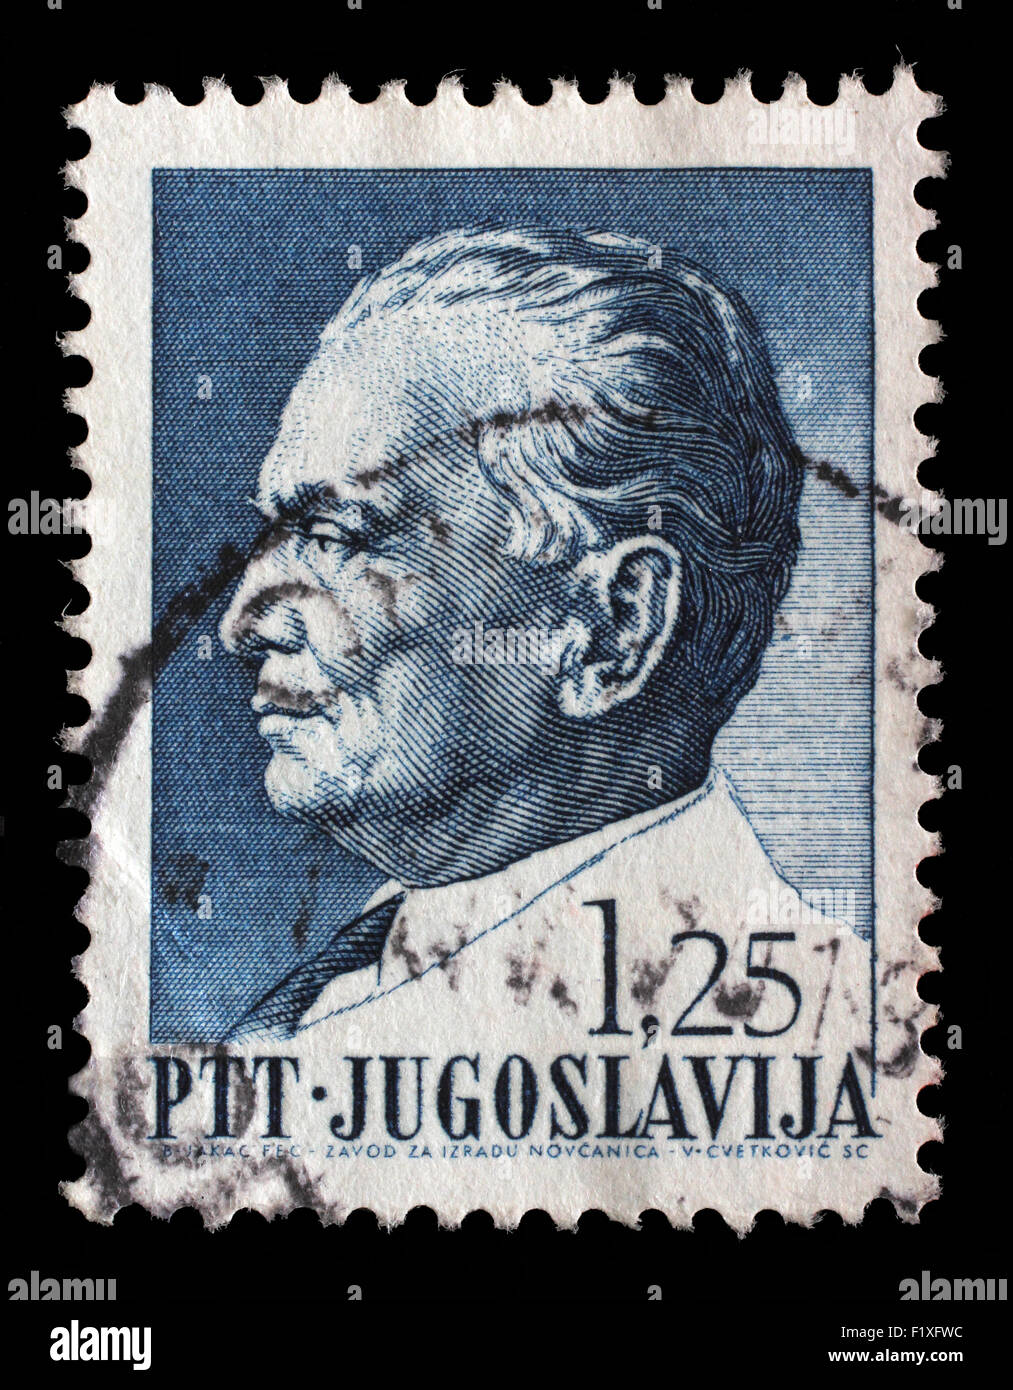 YUGOSLAVIA - CIRCA 1967: Stamp printed in Yugoslavia shows a portrait of Yugoslavian President Josip Broz Tito, circa 1967 Stock Photo